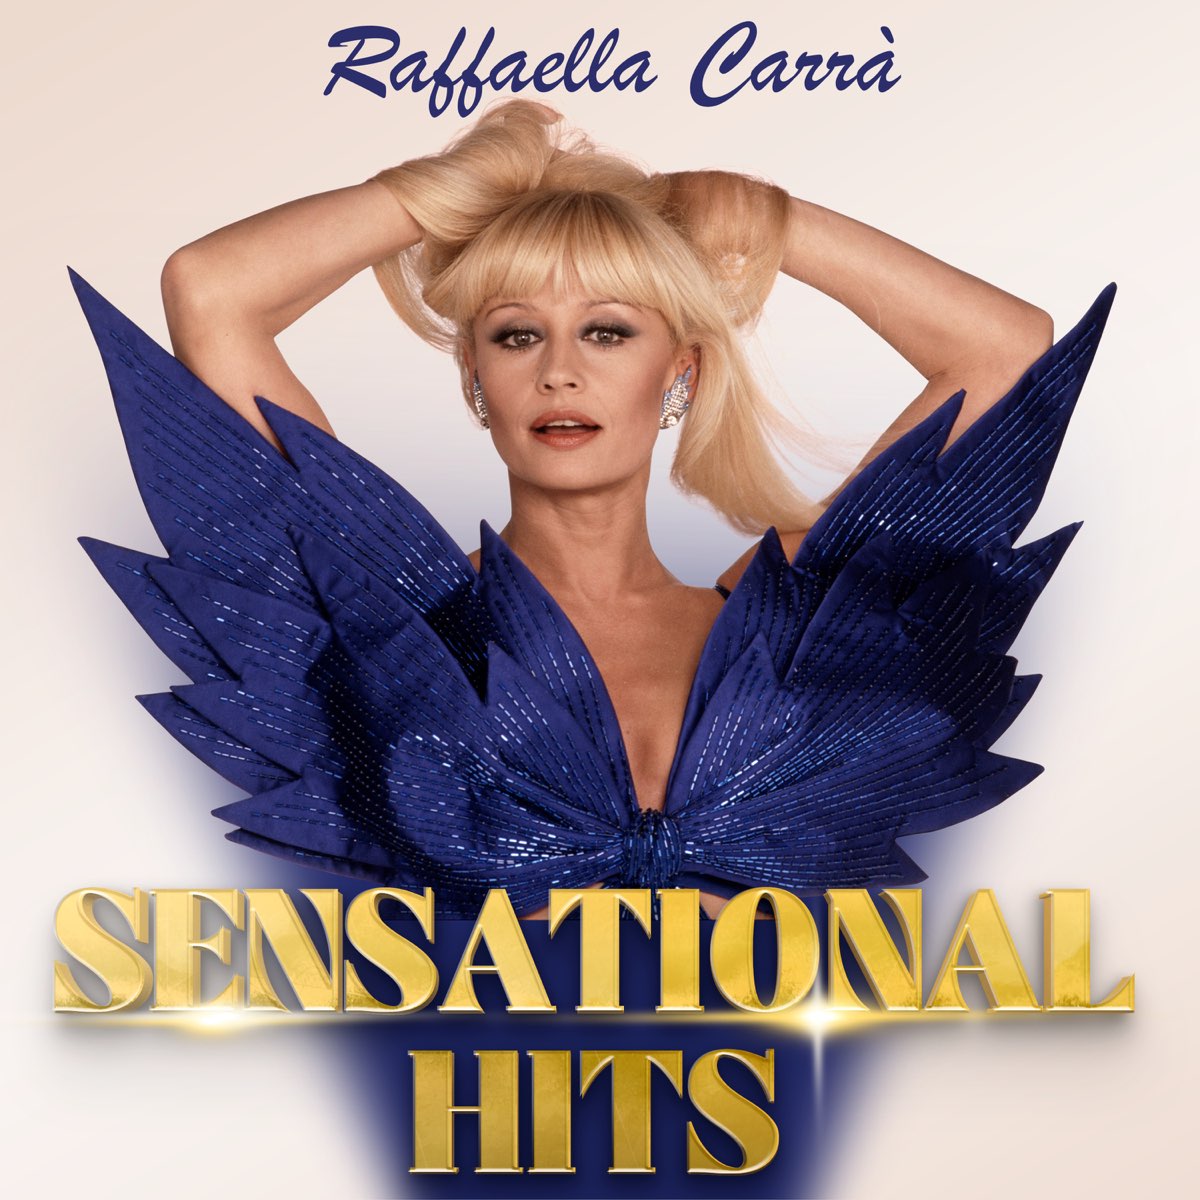 Raffaella Carrà: Sensational Hits – Album par Raffaella Carrà – Apple Music